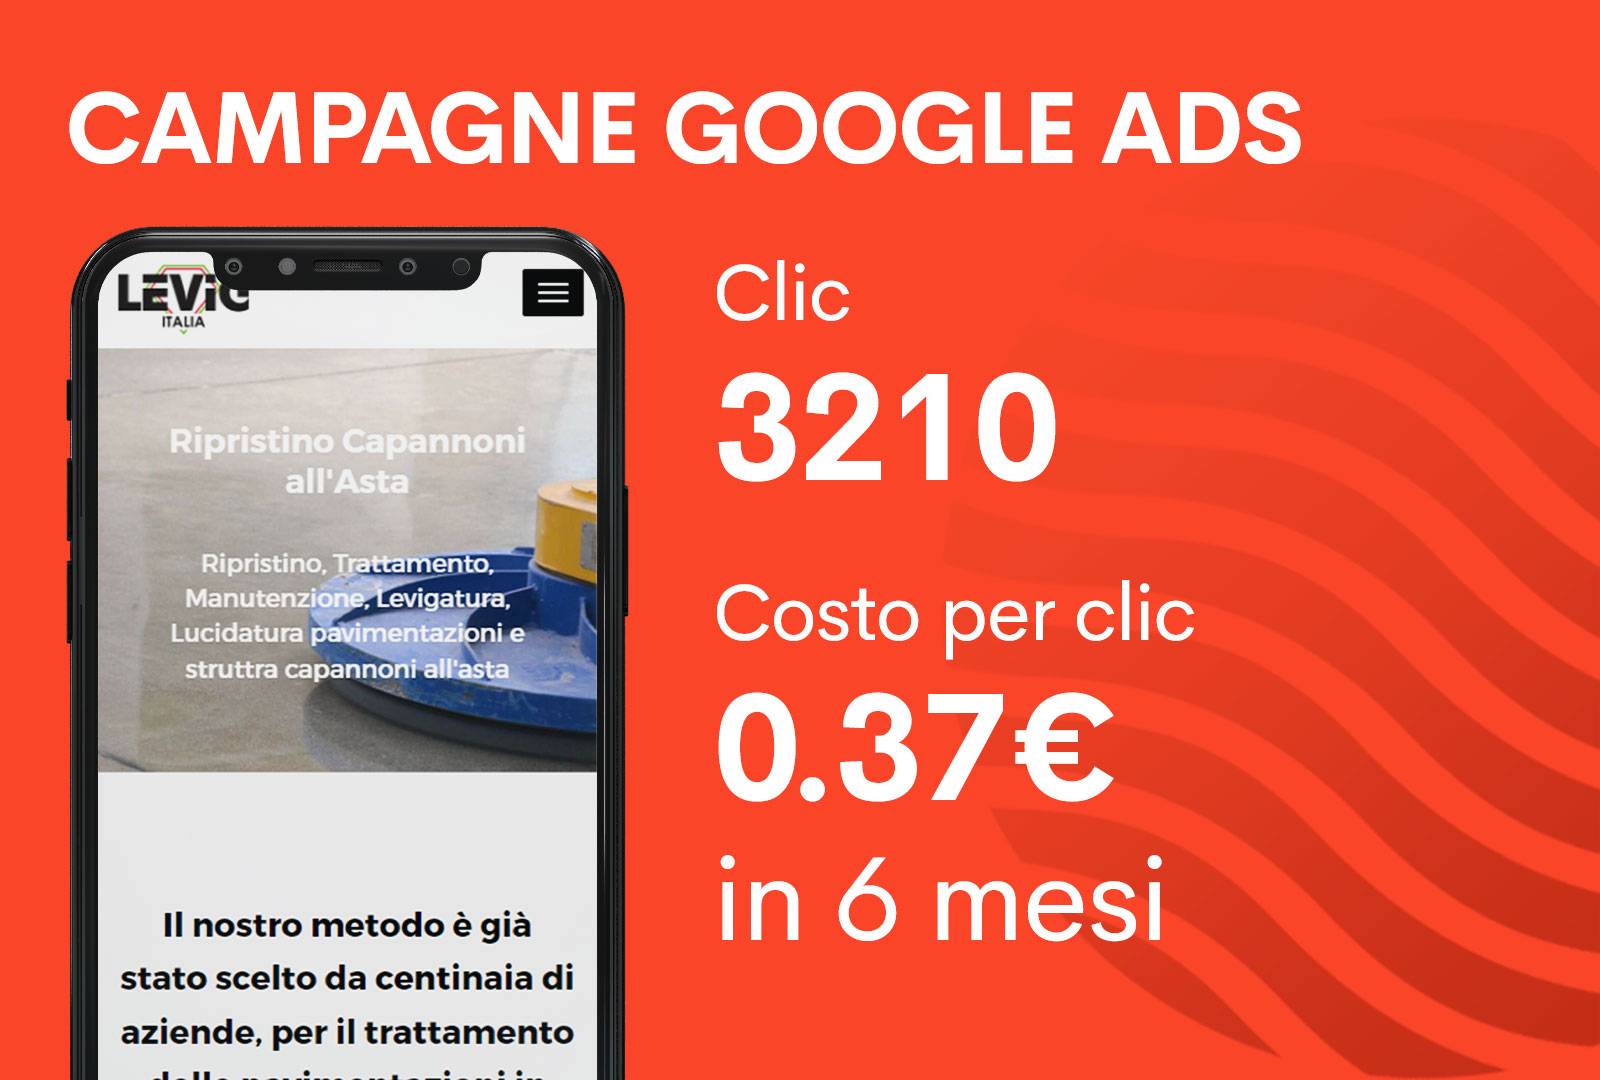 Levig Italia: GOOGLE ADS